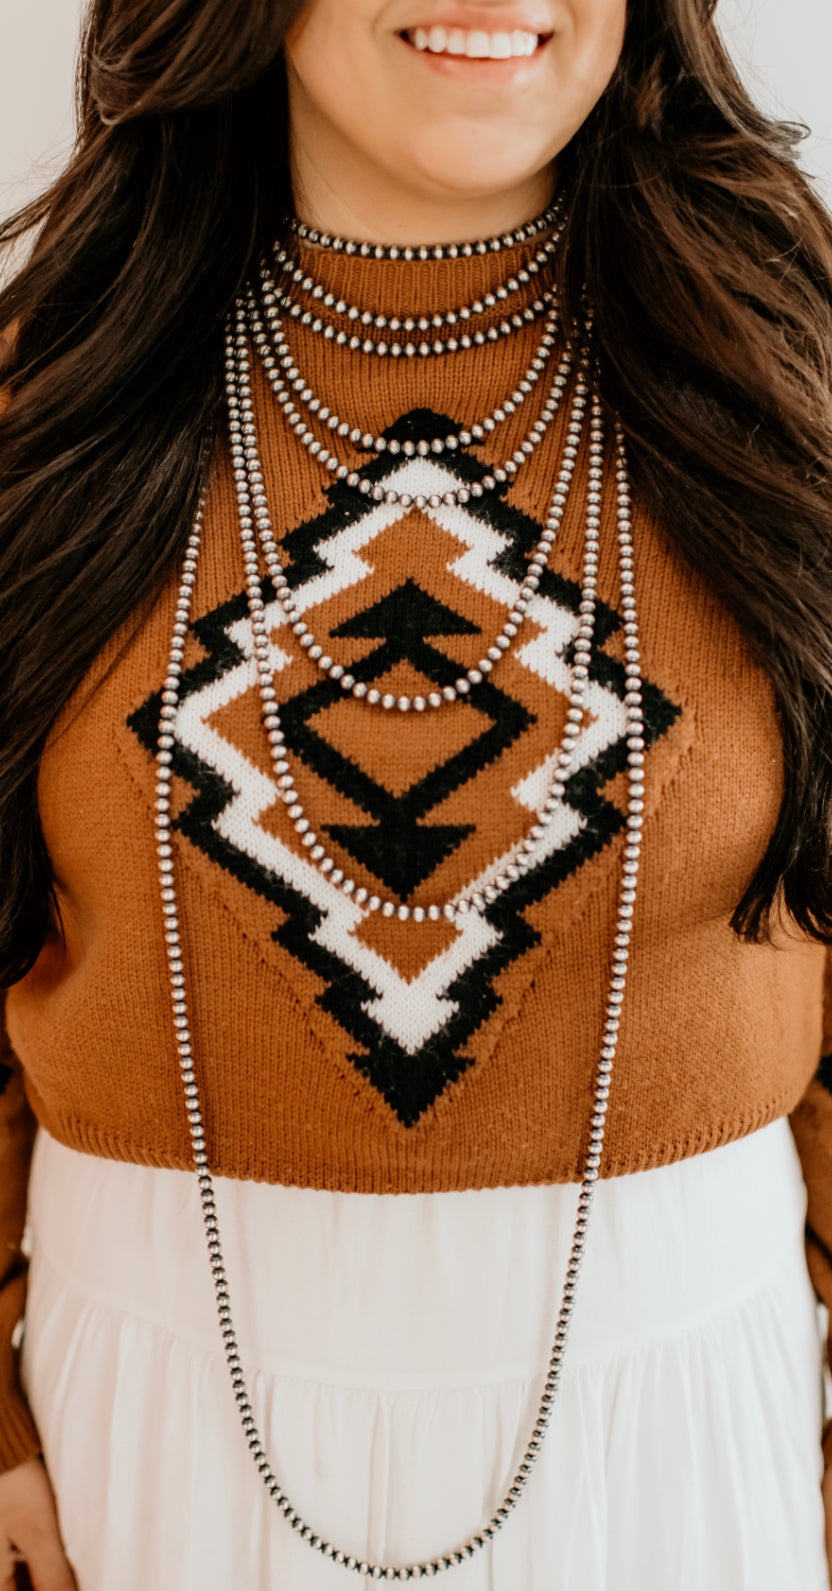 6mm Navajo Pearls - varying lengths